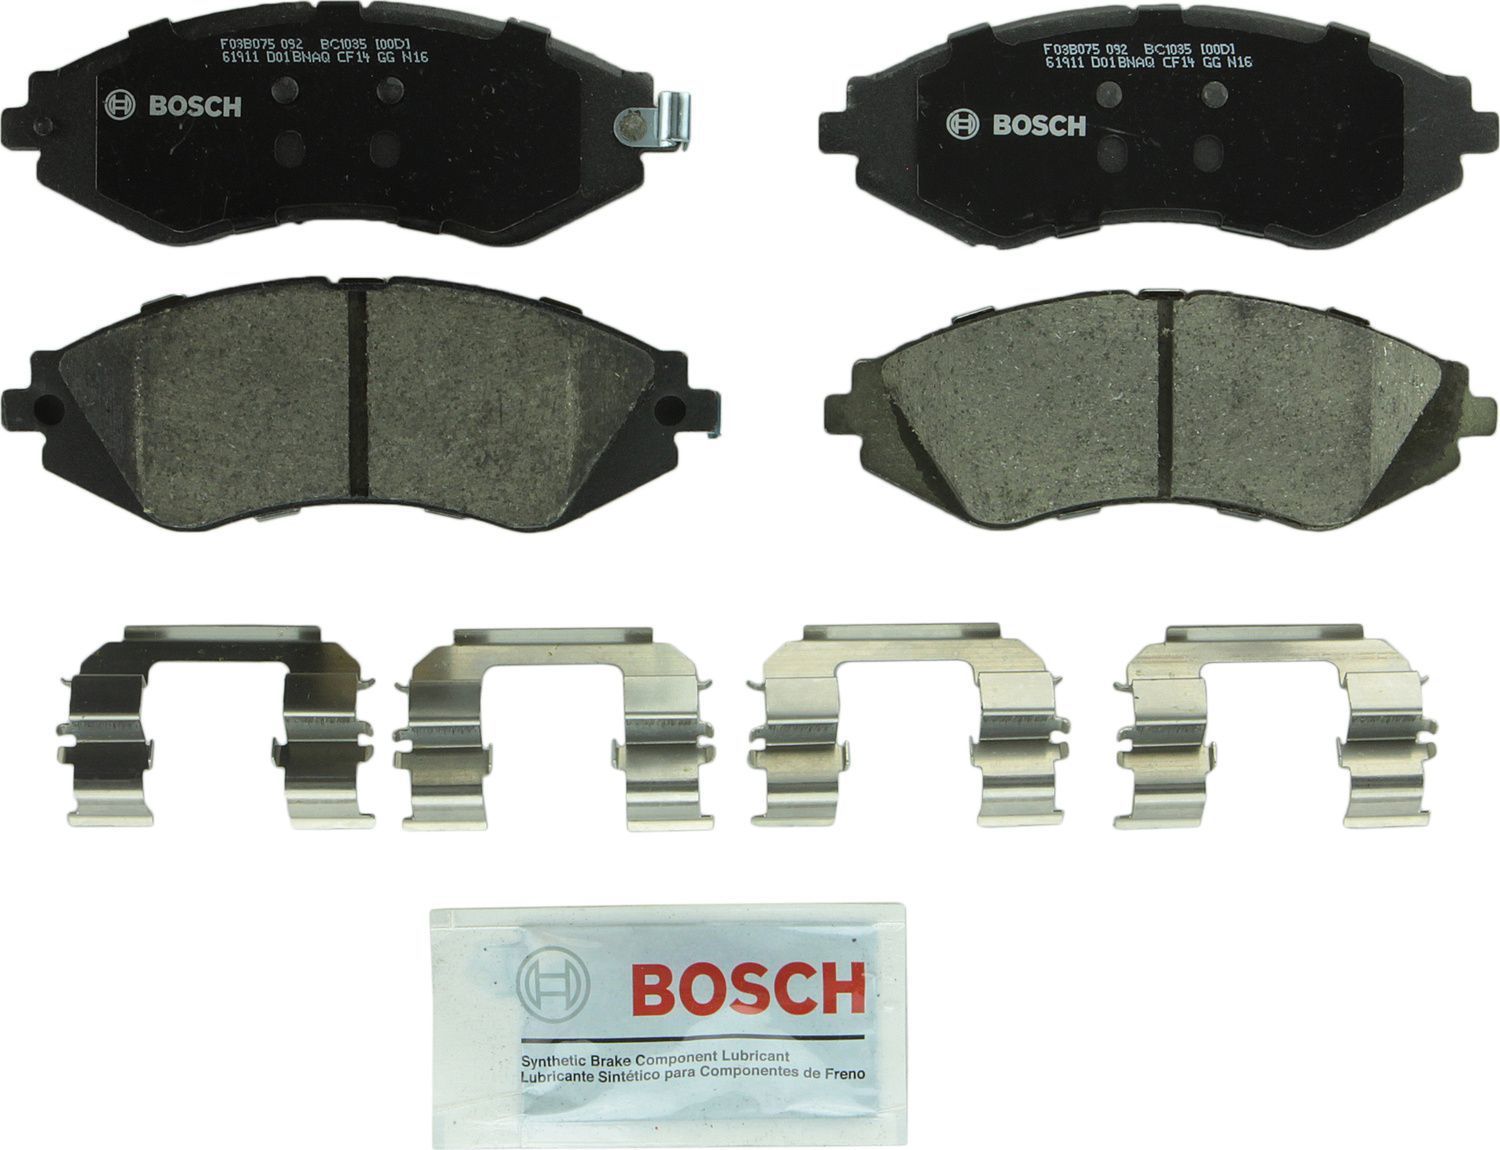 BOSCH BRAKE - Bosch QuietCast Brake Pad Ceramic Brake Pads (Front) - BQC BC1035